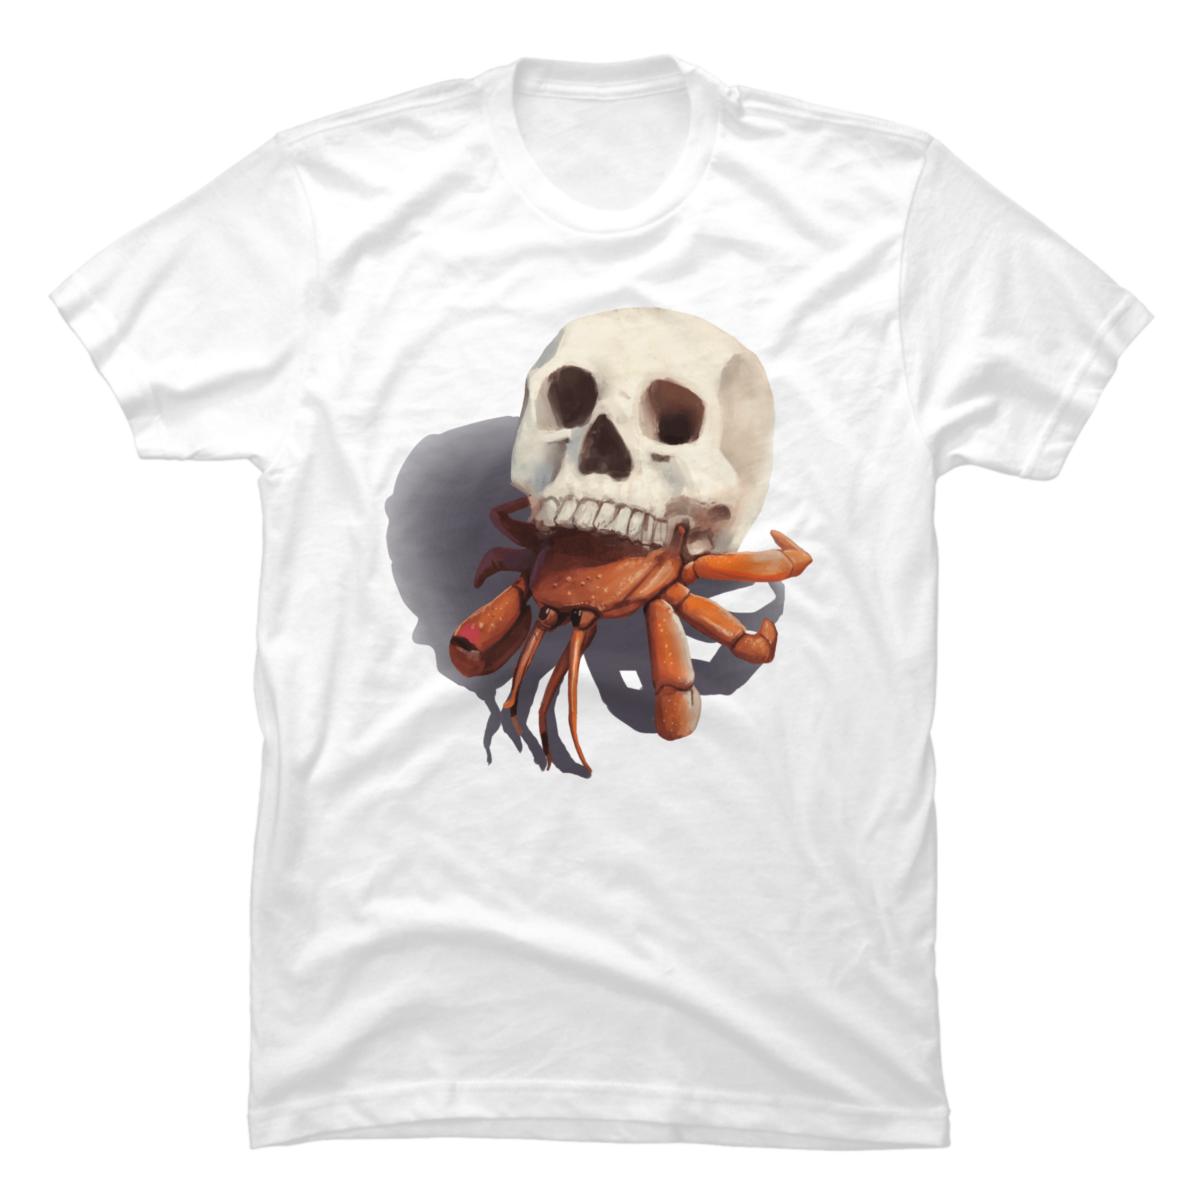 crab t shirt designs